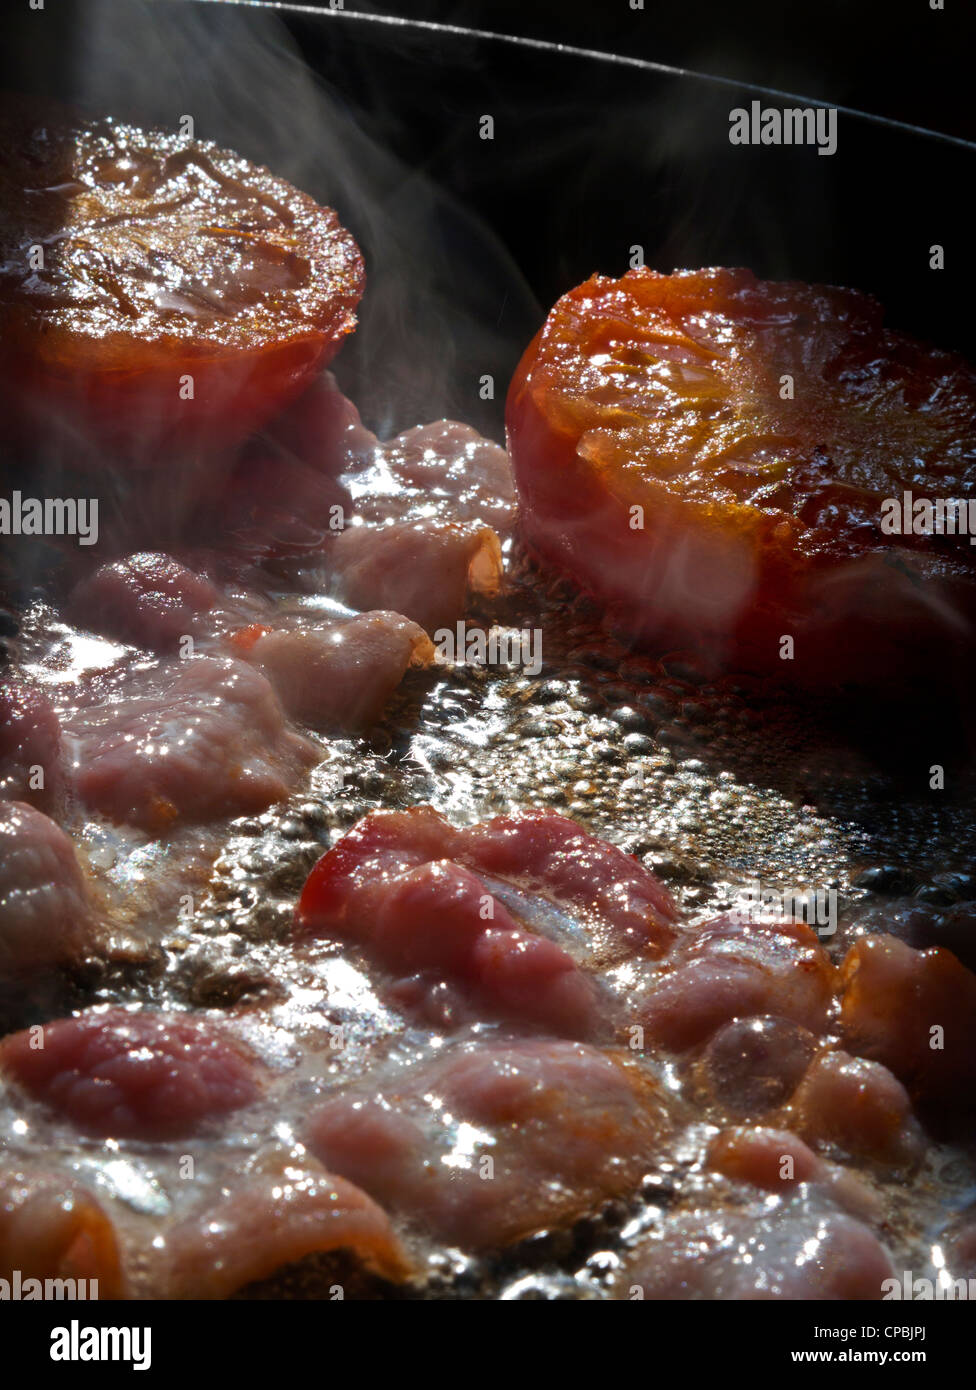 Shaft of sunlight illuminates streaky bacon rashers and tomatoes frying in hot pan Stock Photo